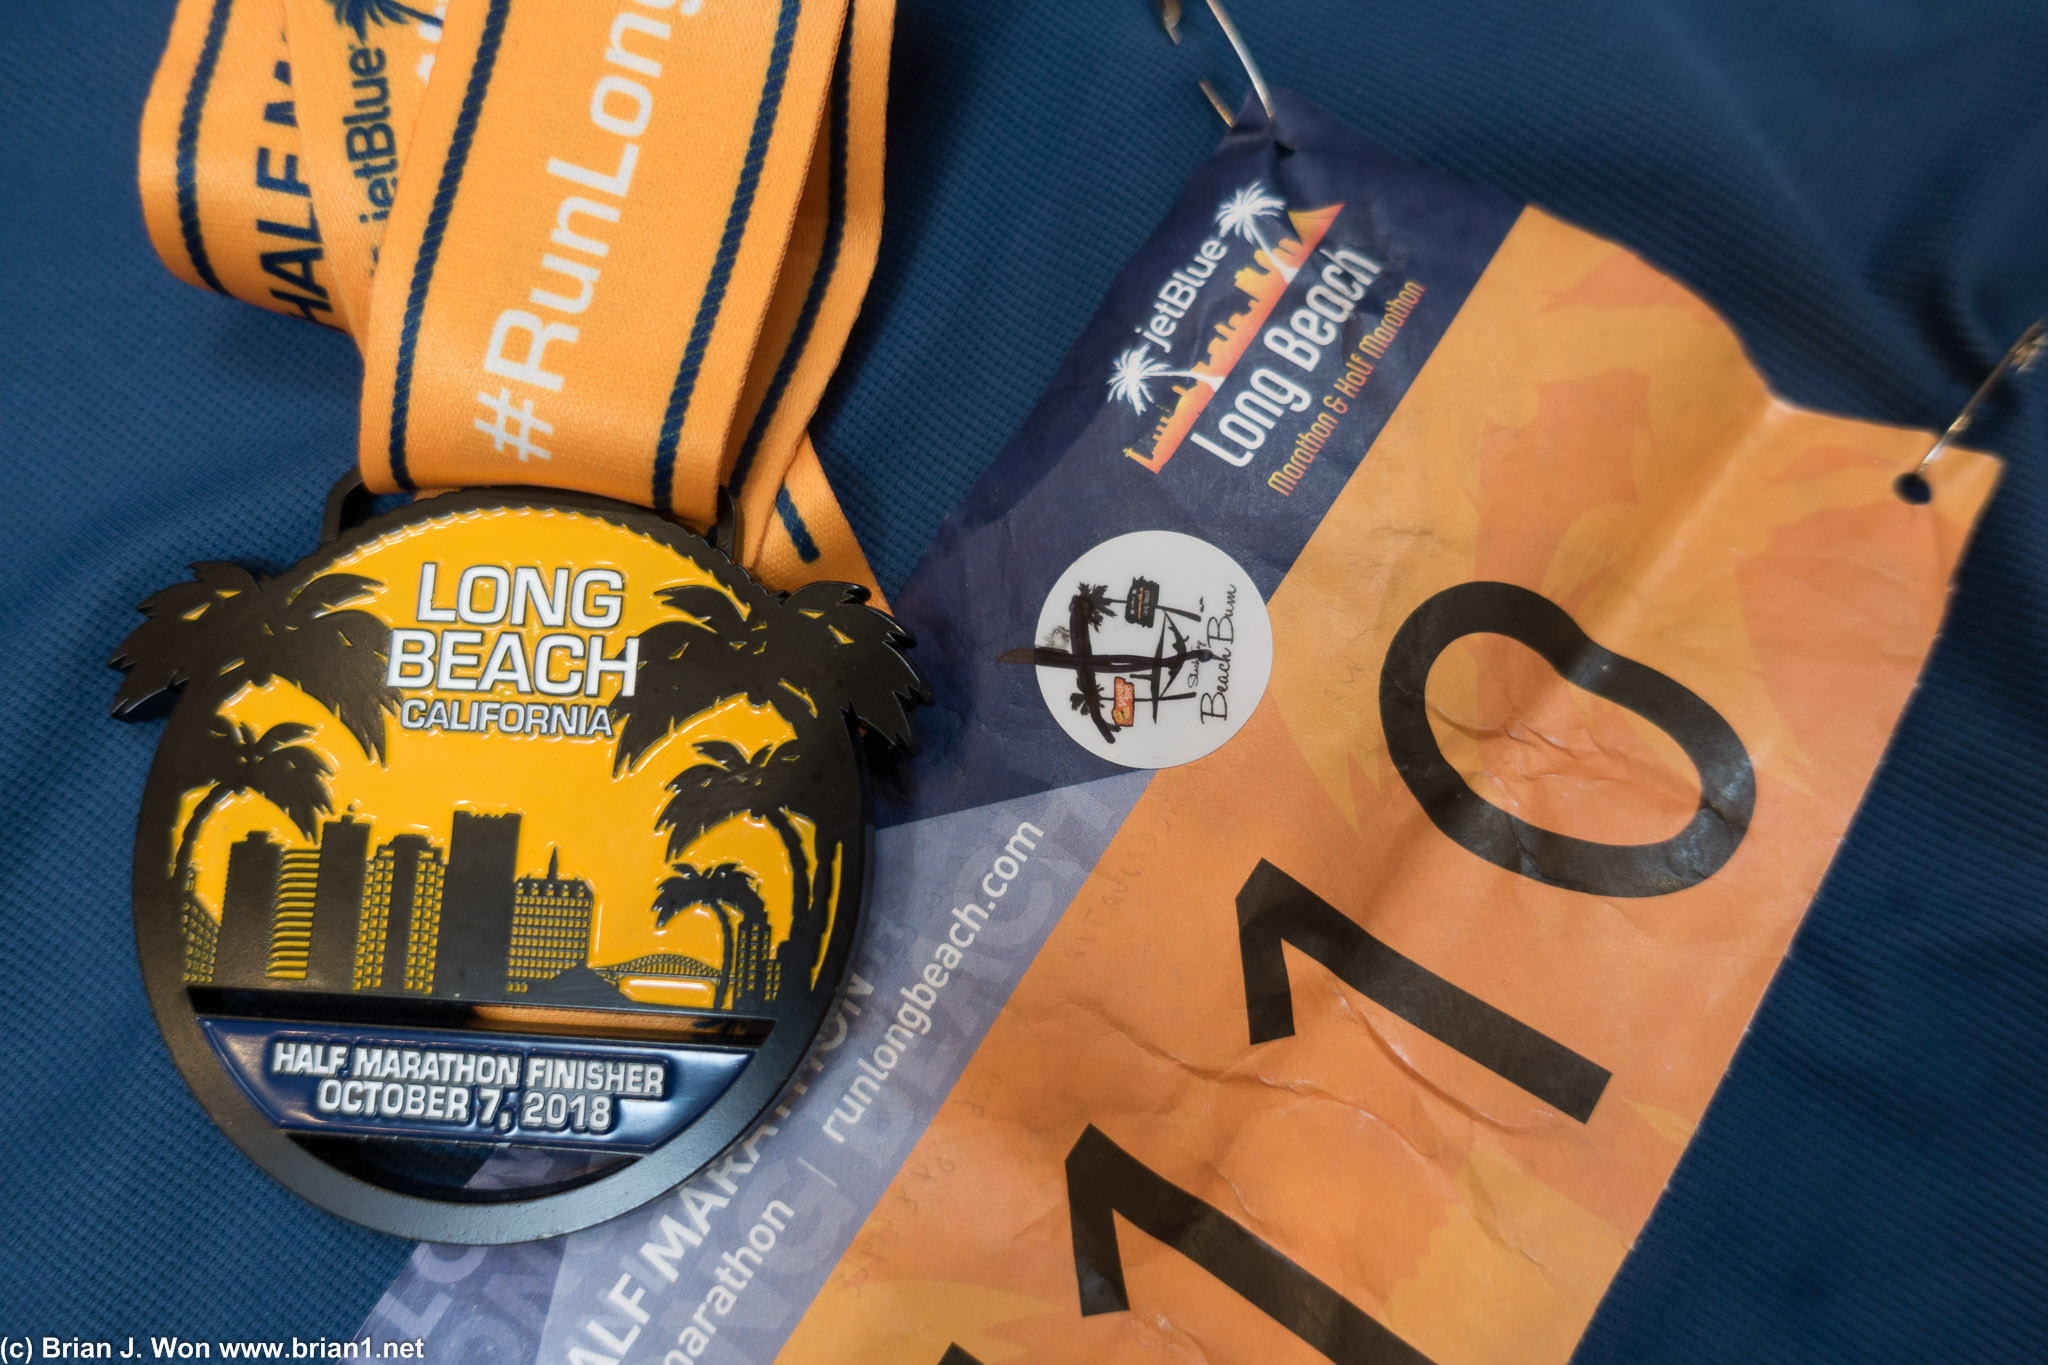 Long Beach Half Marathon bib and finisher's medal.